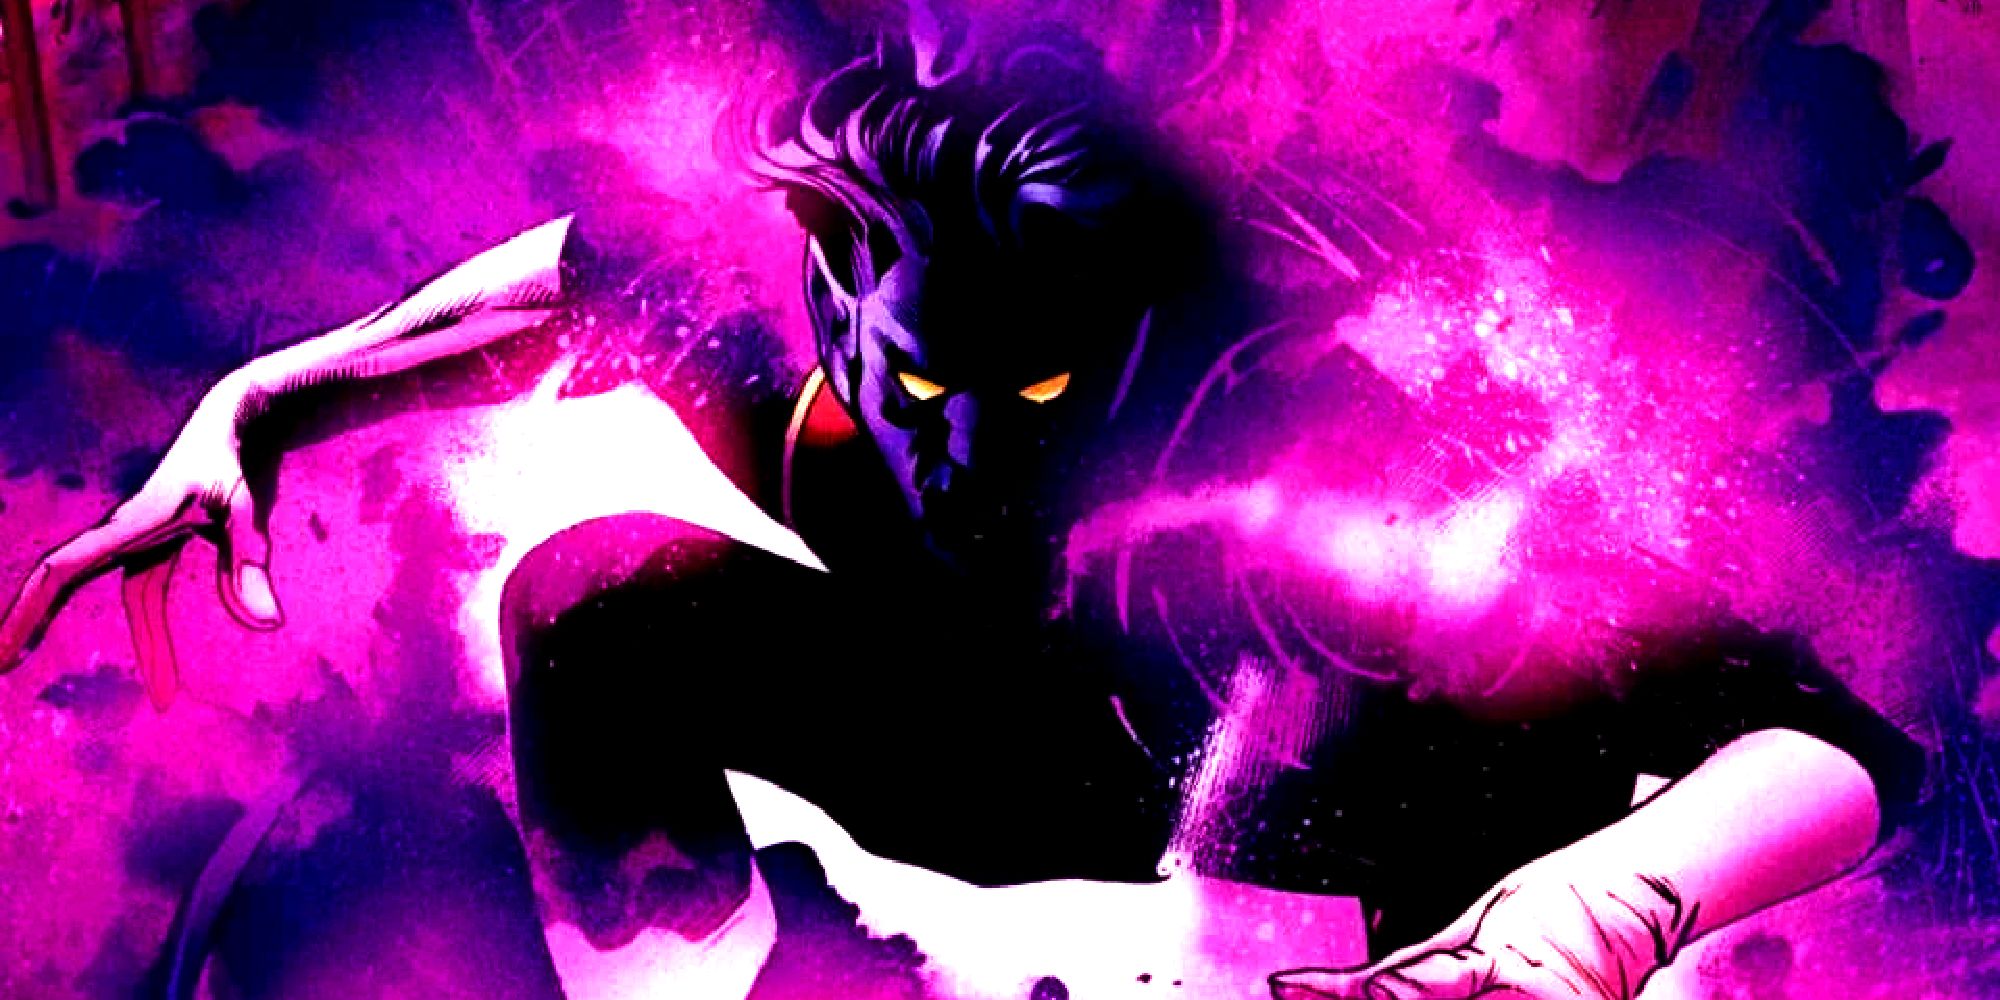 Nightcrawler teleports in a cloud of purple and blue smoke in X-Men Comics